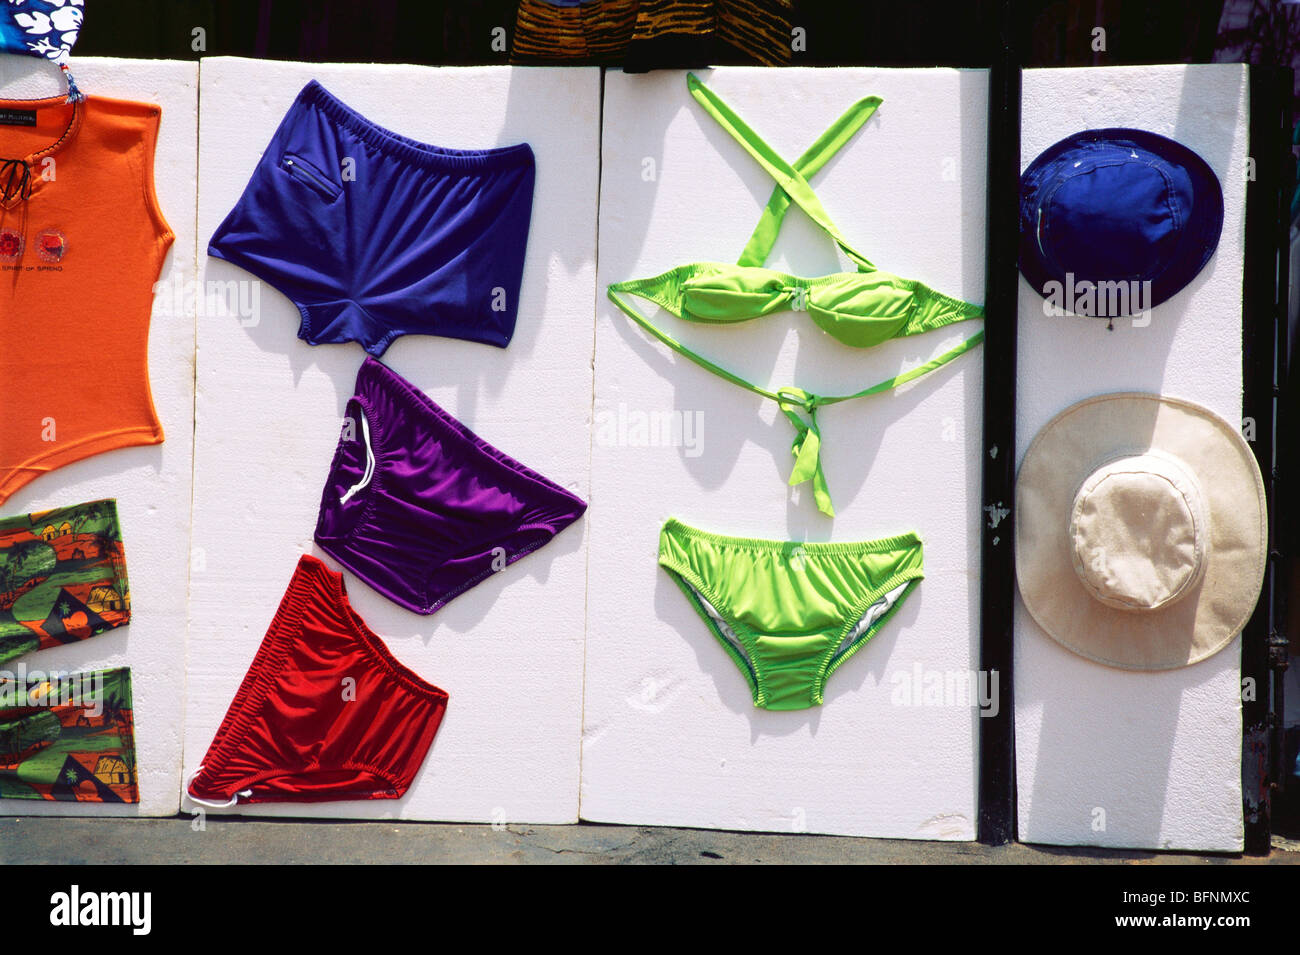 https://c8.alamy.com/comp/BFNMXC/bikini-hat-bra-underwear-garments-display-shop-window-goa-india-asia-BFNMXC.jpg